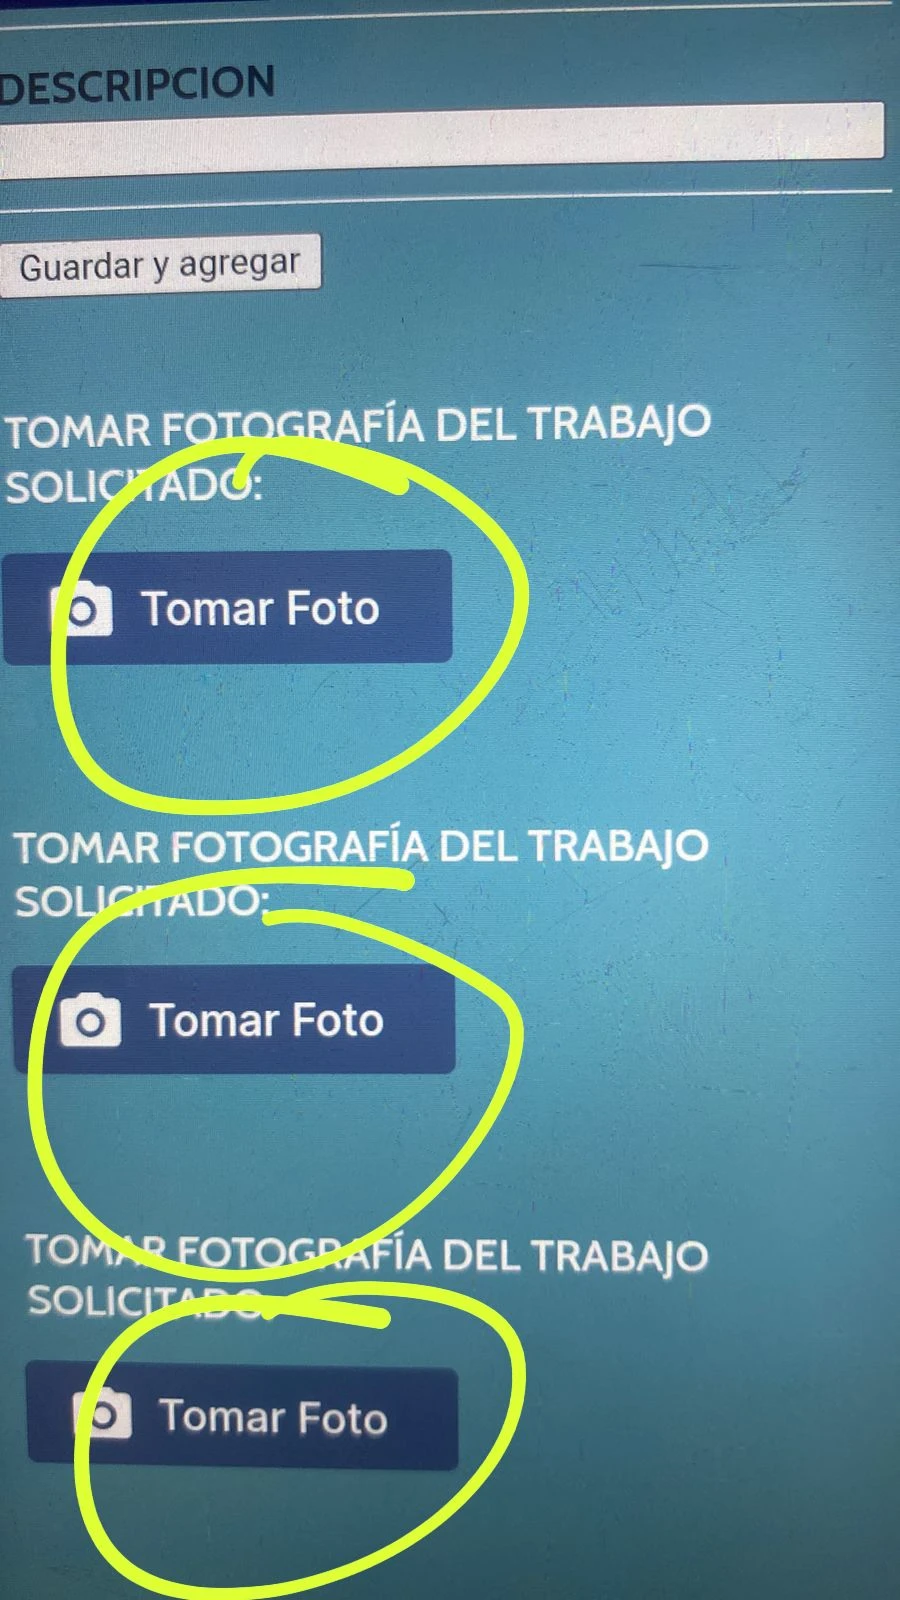 Jotform App: Take photo widget is not working Image 1 Screenshot 20